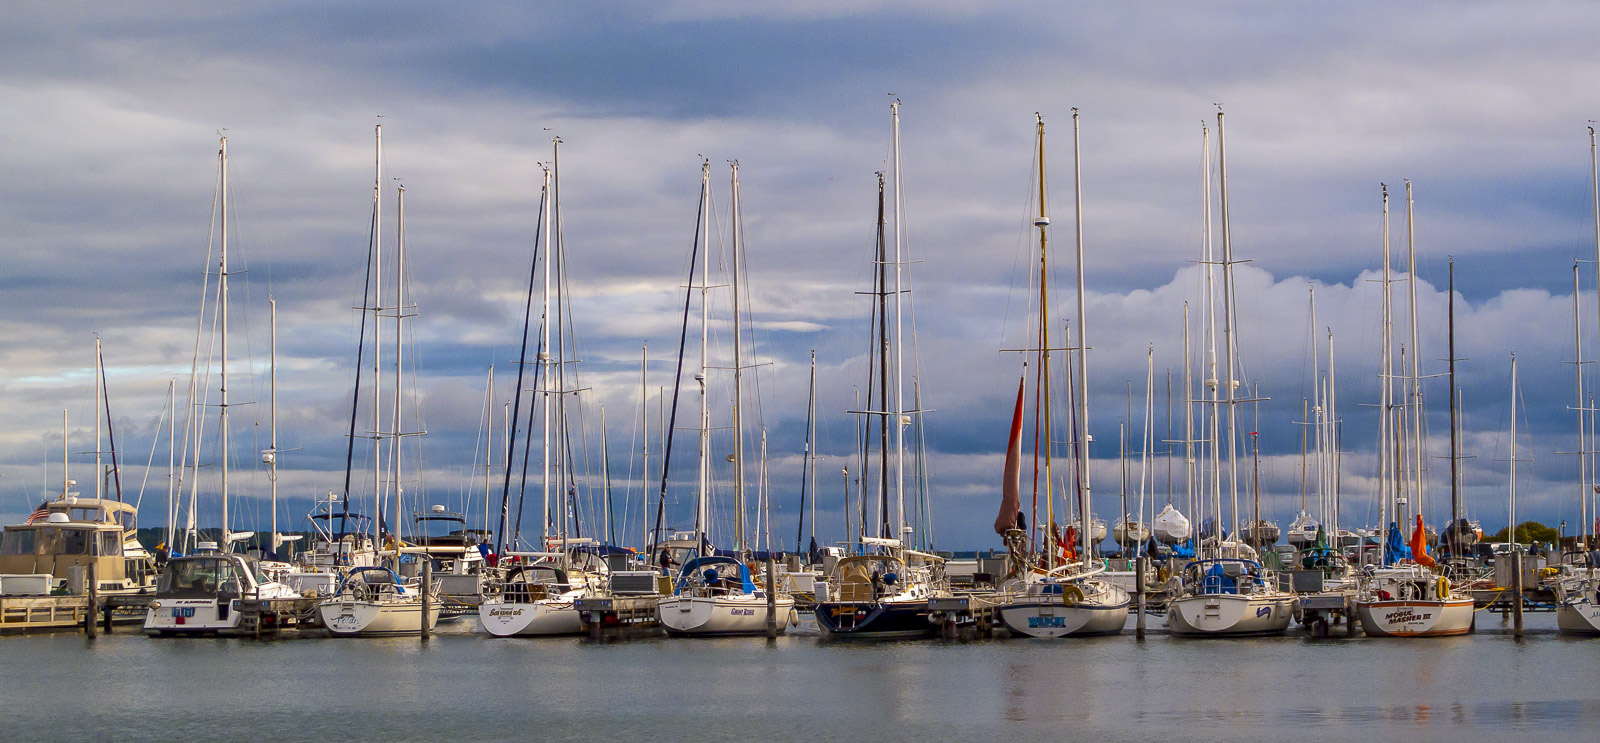 Boats in Bayfield Marina